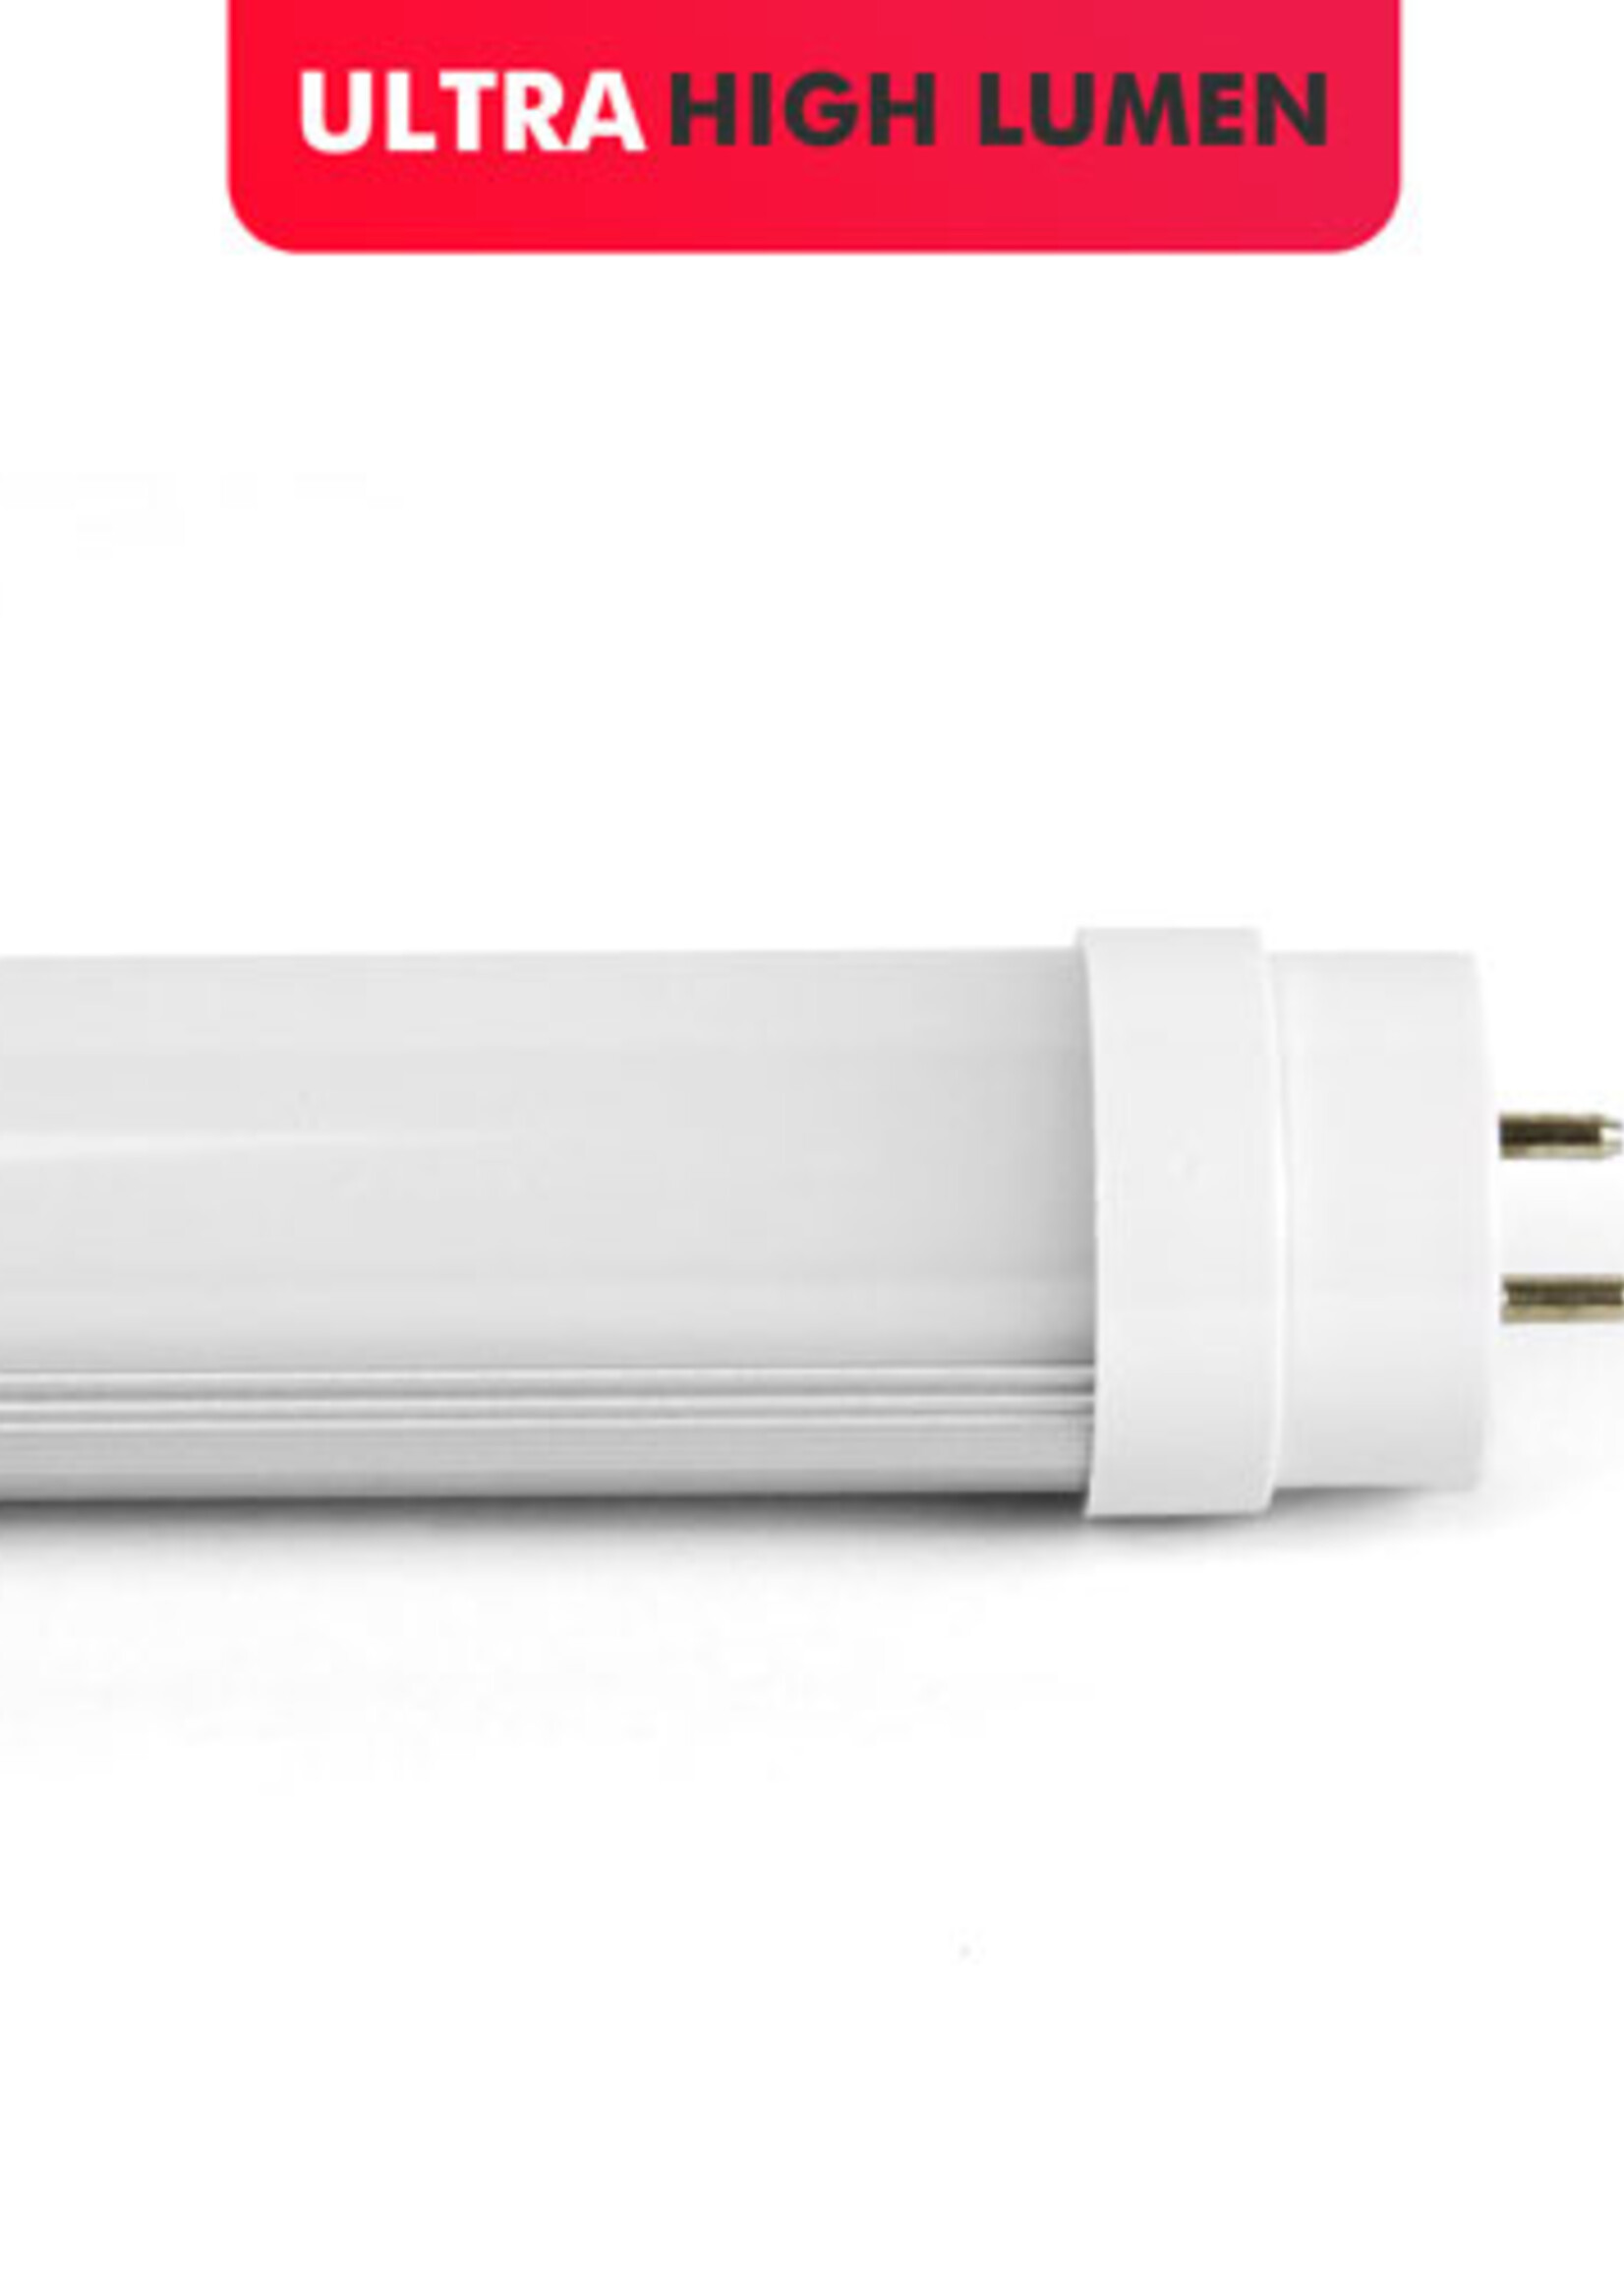 LEDWINKEL-Online LED TL Buis 120cm 18W 160lm/W - Ultra High lumen